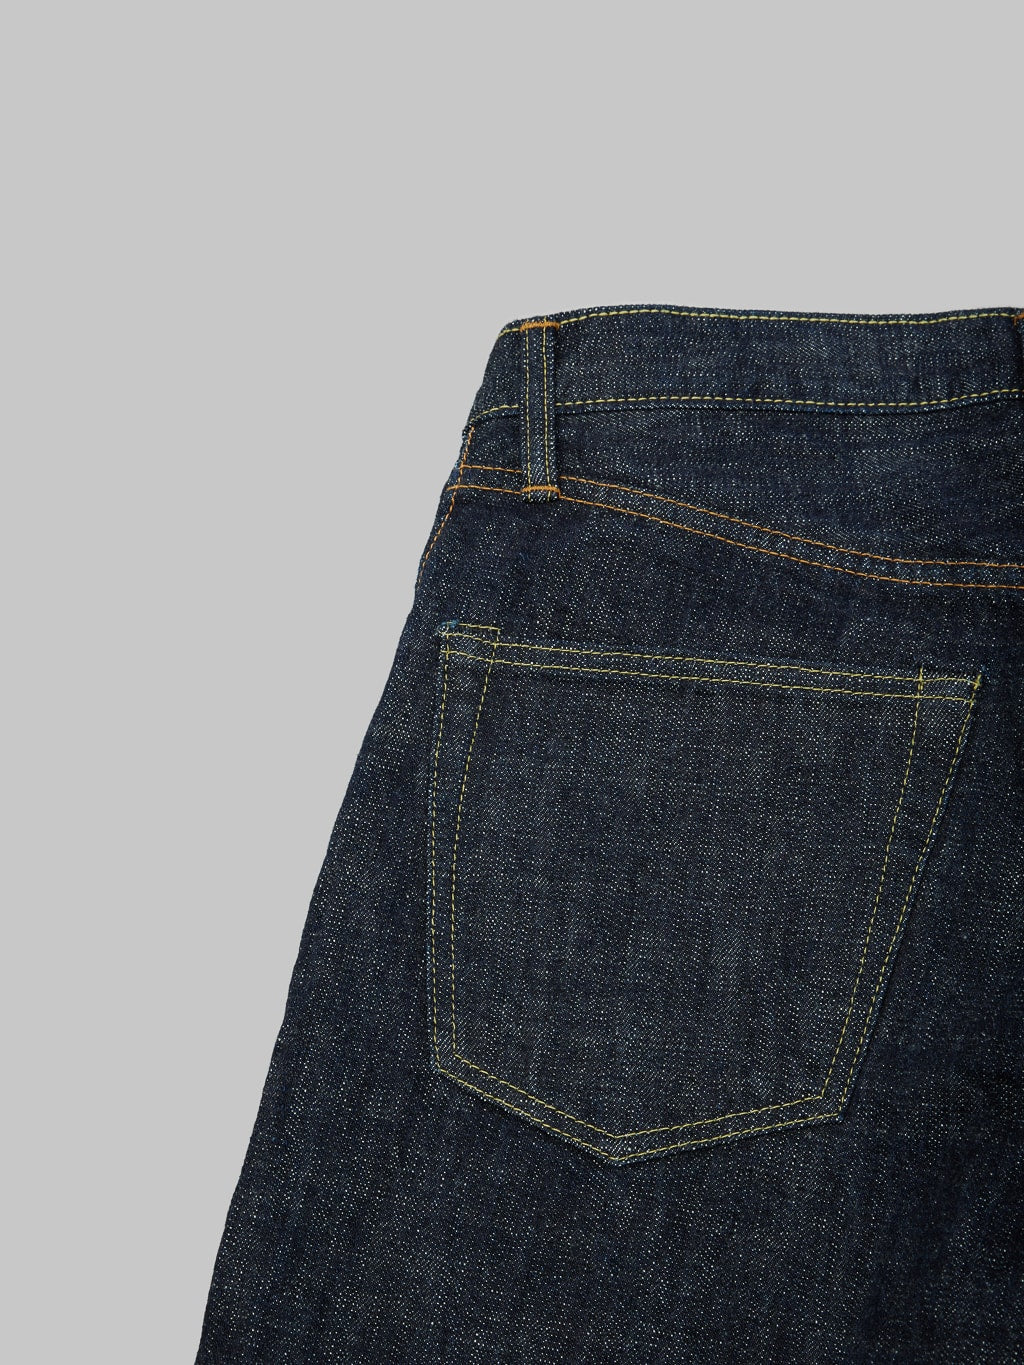 Fob factory slim straight jean back pocket fabric